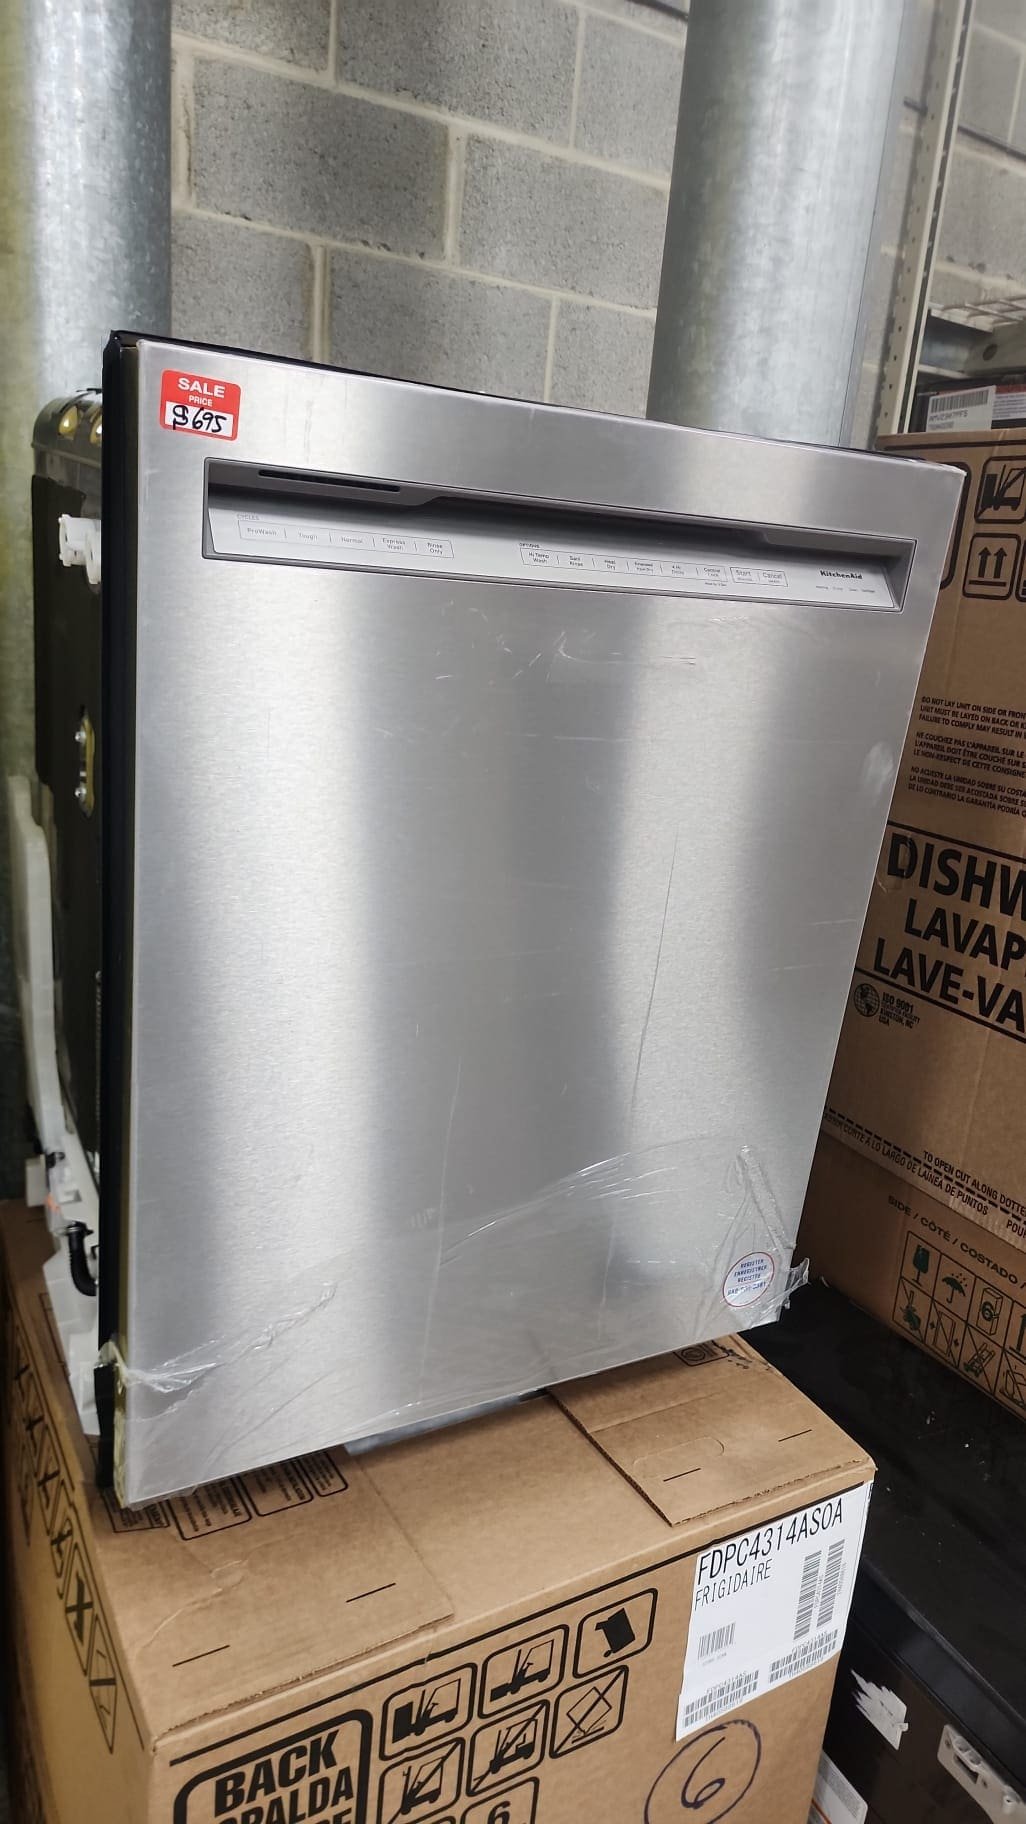 kitchen aid Like New Dishwasher – Stainless